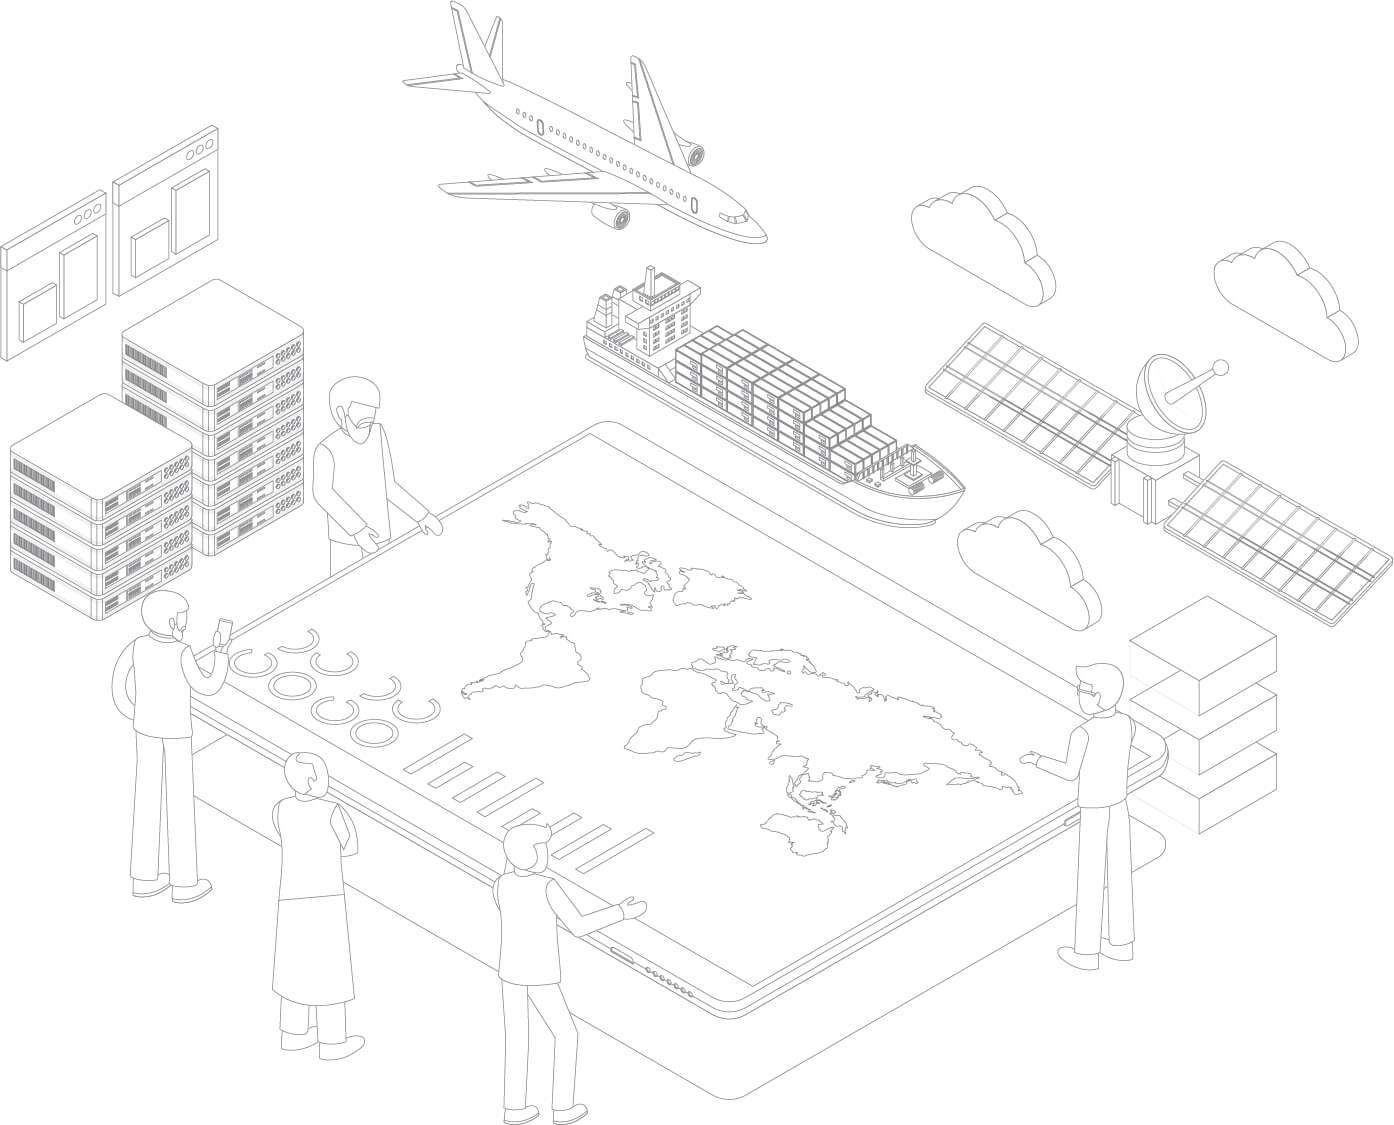 Illustration of People Planning Shipping Logistics